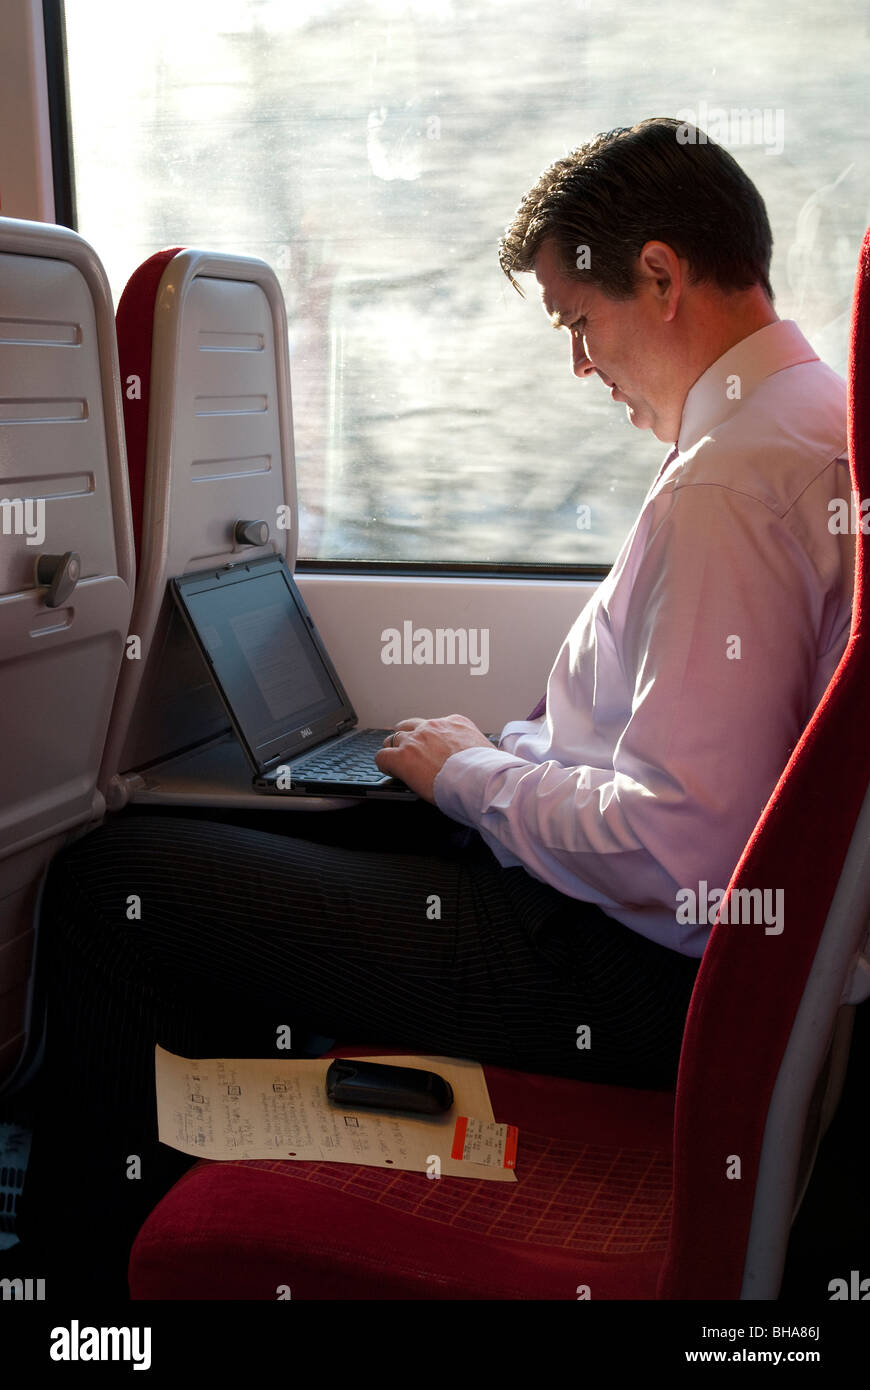 Business man commuter using laptop computer on passenger train journey Stock Photo